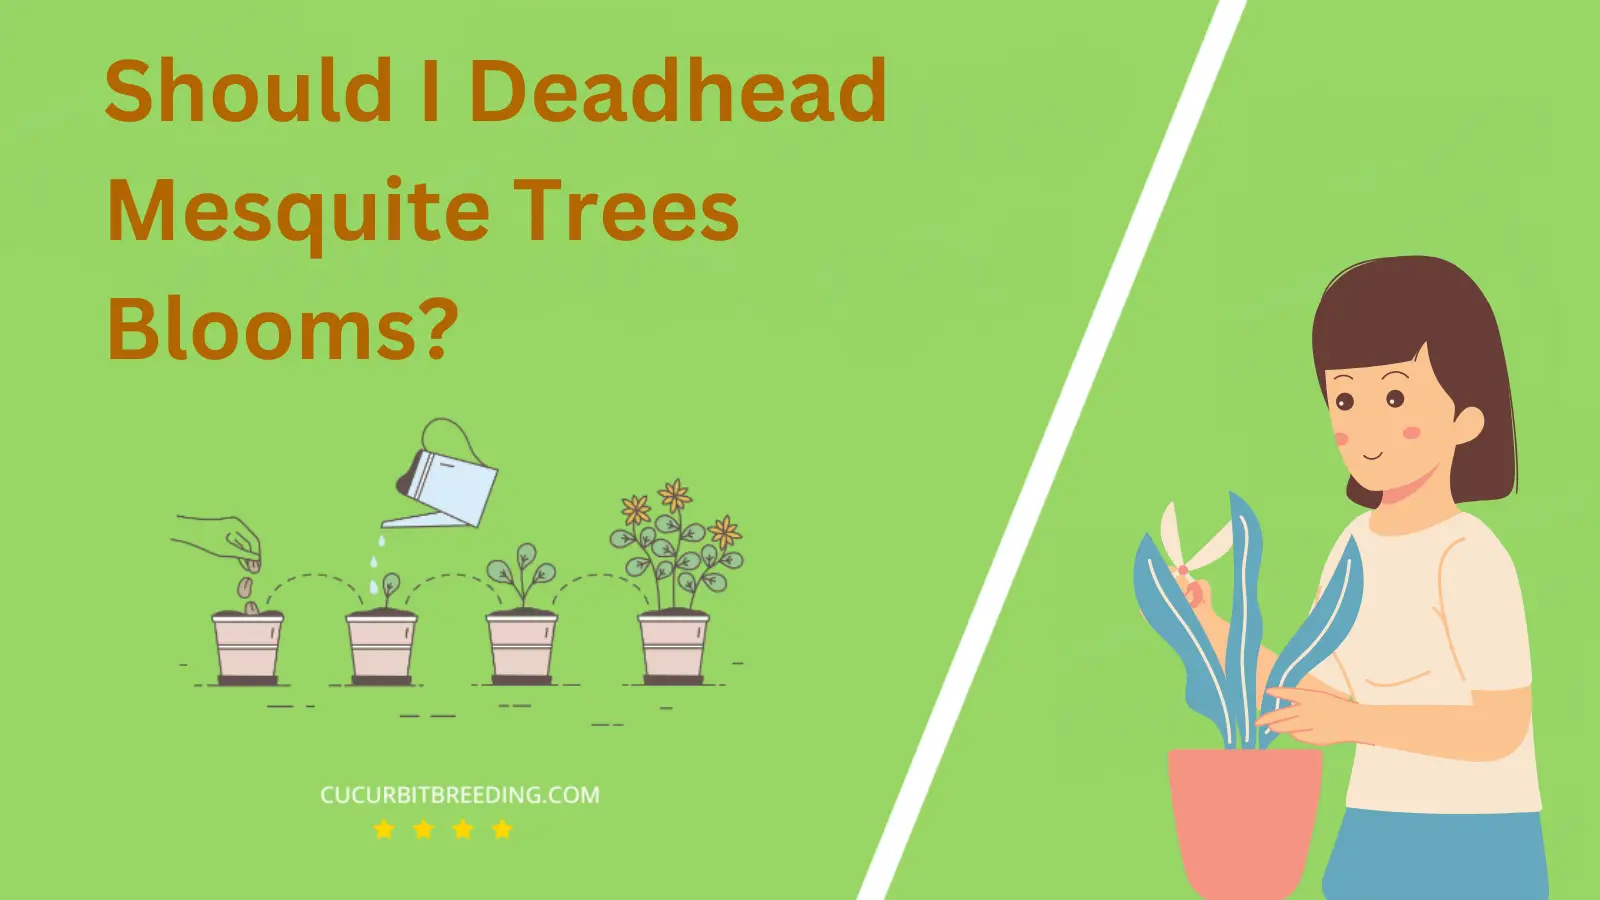 Should I Deadhead Mesquite Trees Blooms?